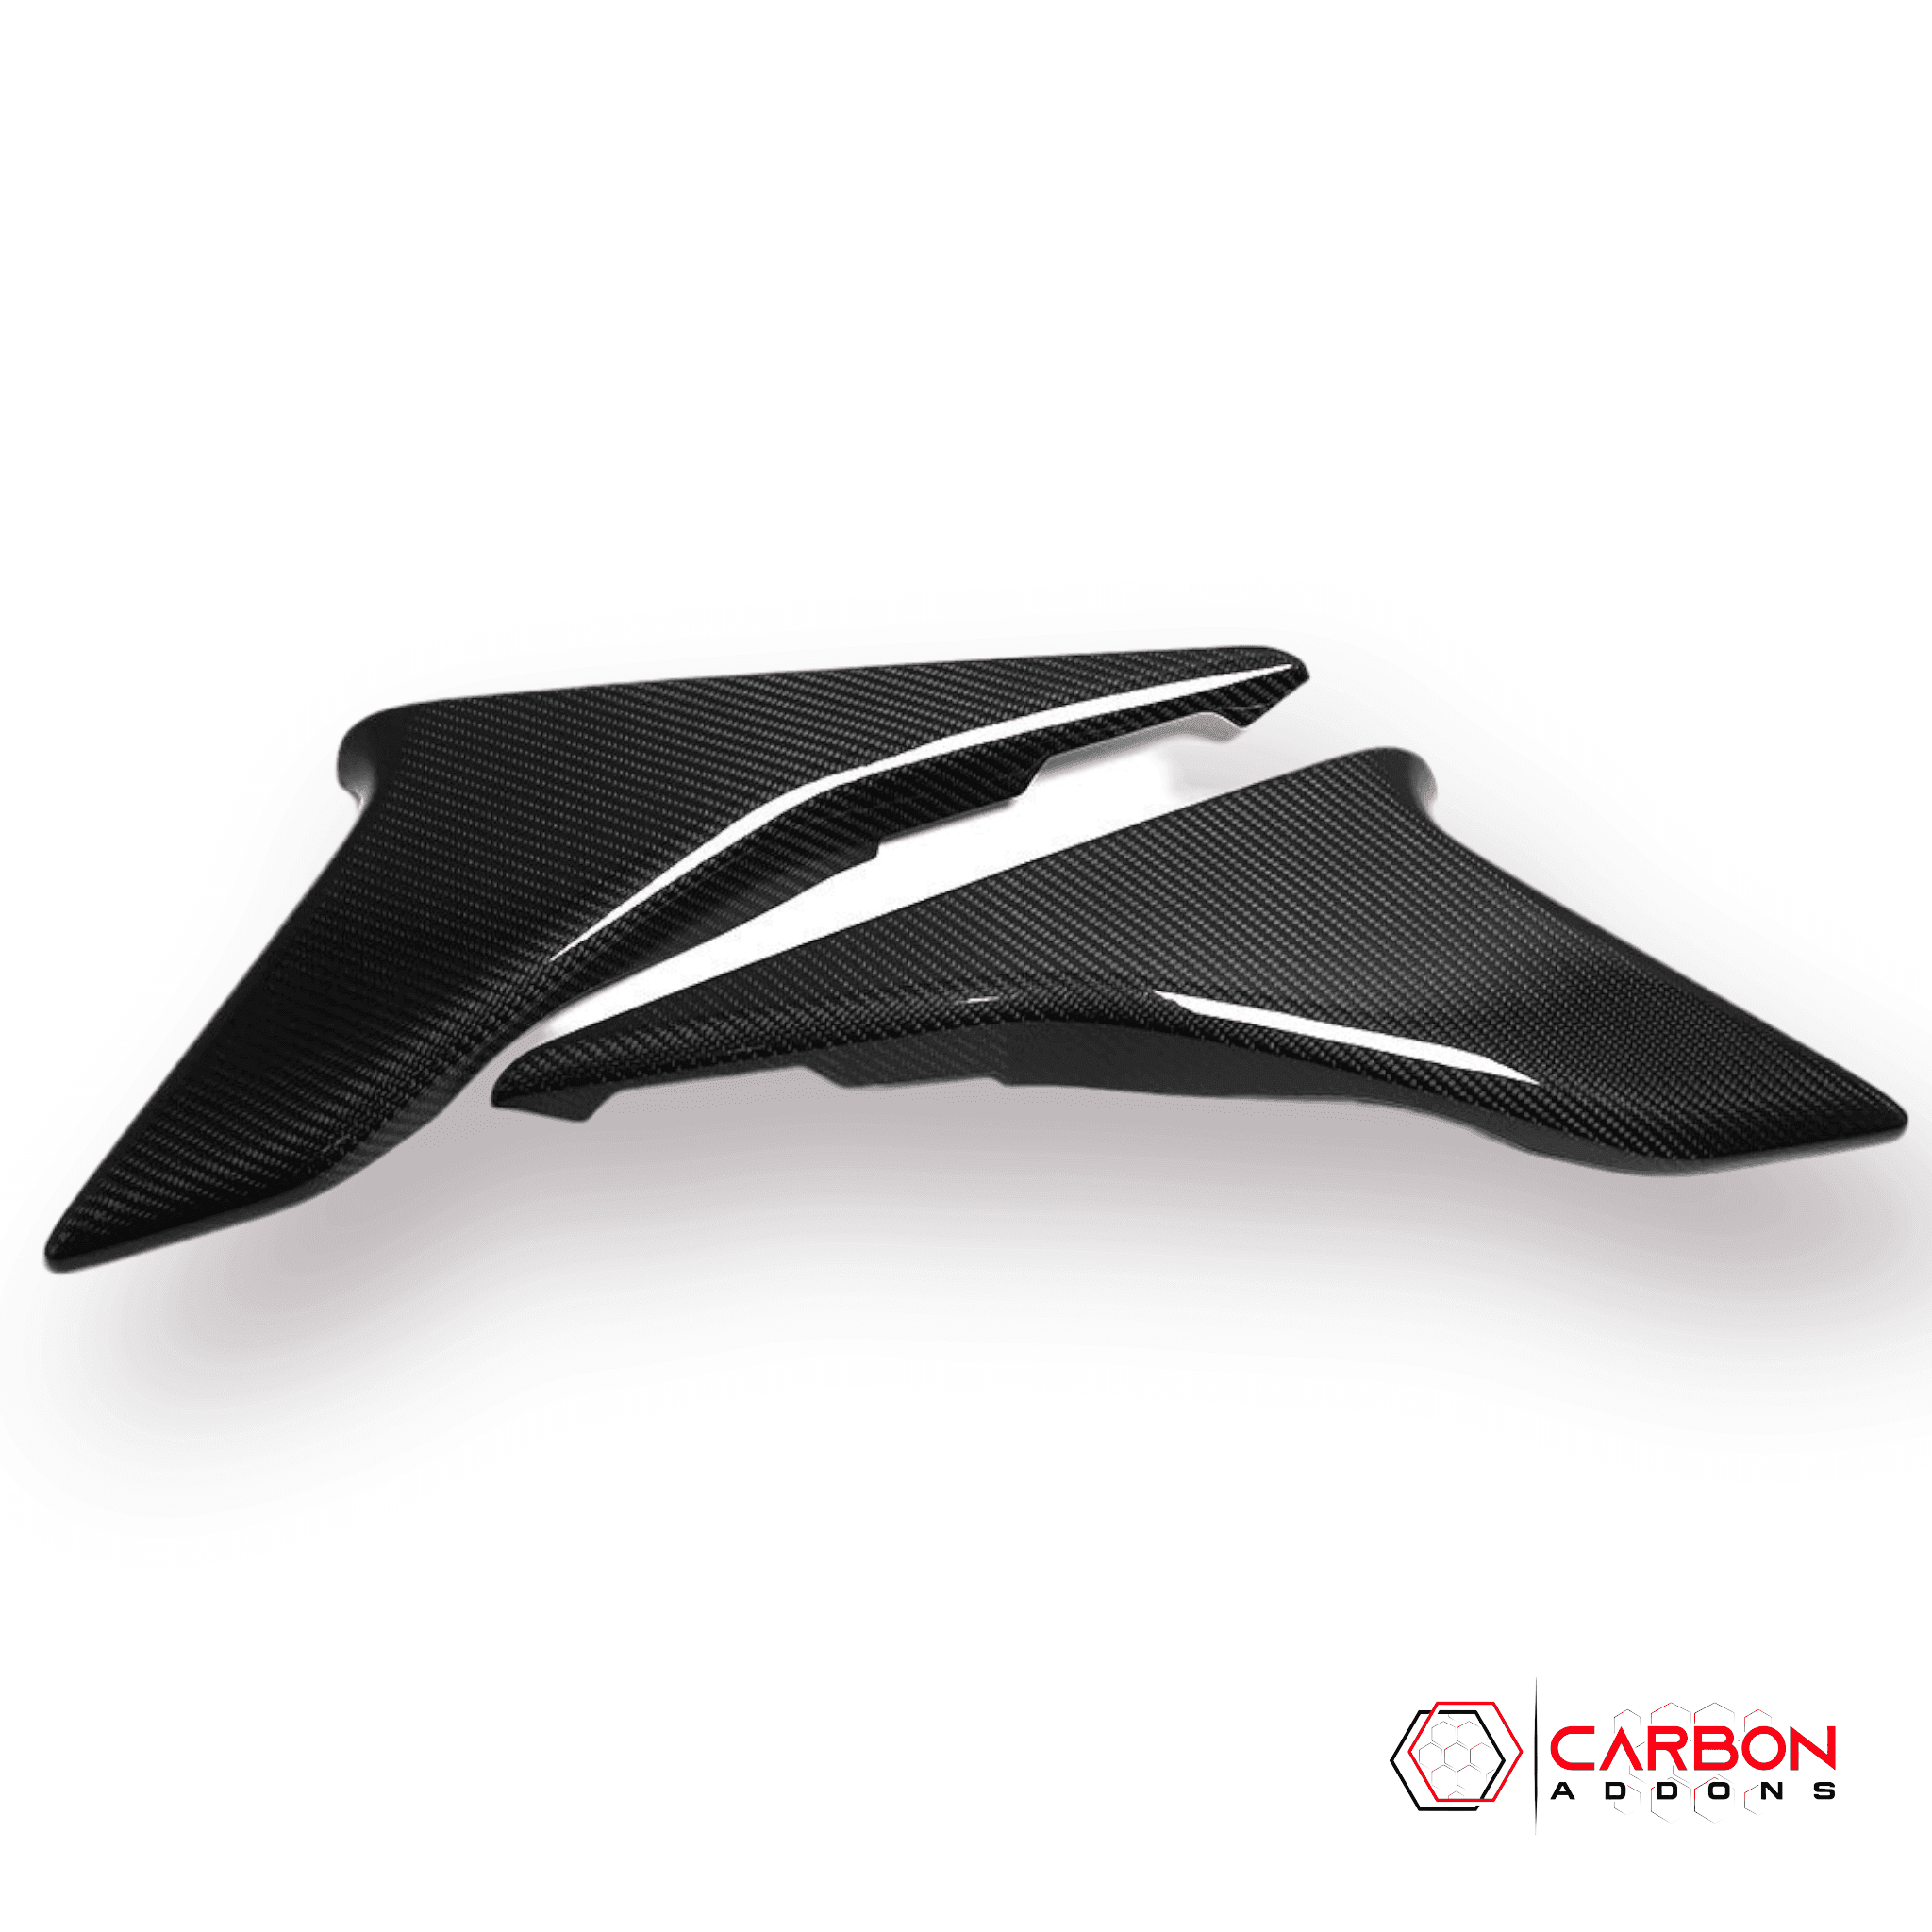 C8 Corvette 2020+ Real Carbon Fiber Lower Door Panel Trim Cover - carbonaddons Carbon Fiber Parts, Accessories, Upgrades, Mods